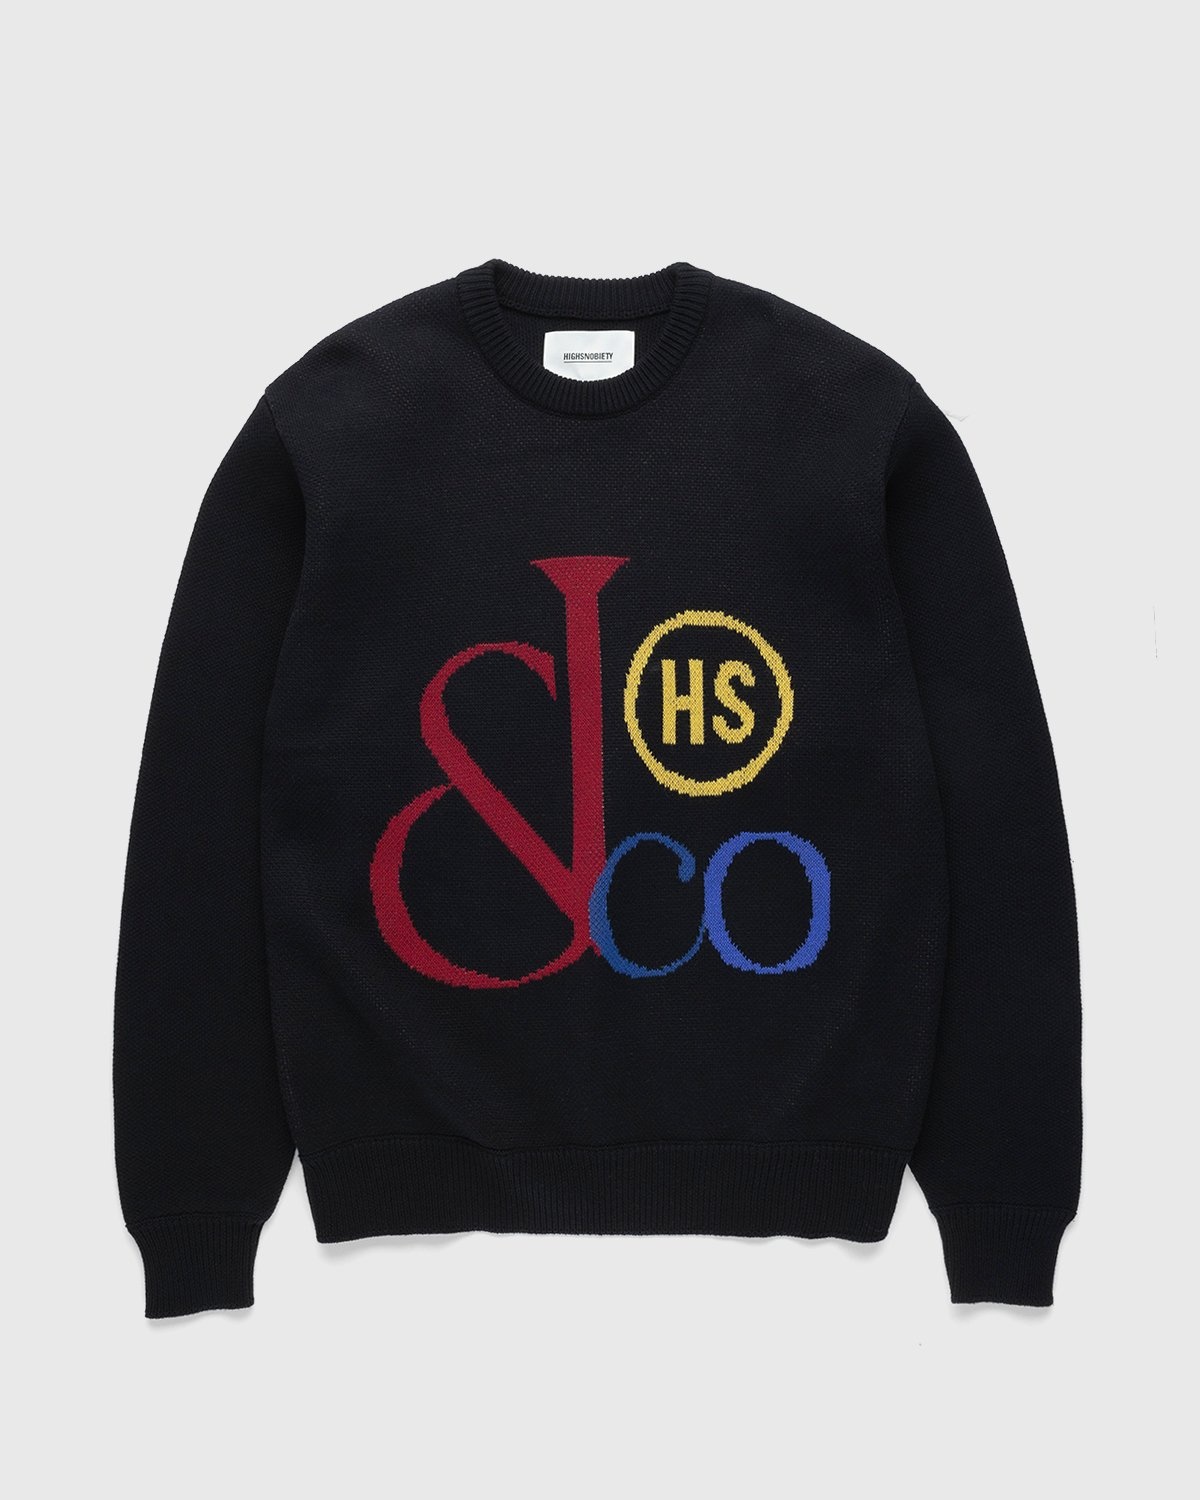 Jacob & Co. x Highsnobiety – Logo Knit Sweater Black - Sweats - Black - Image 1